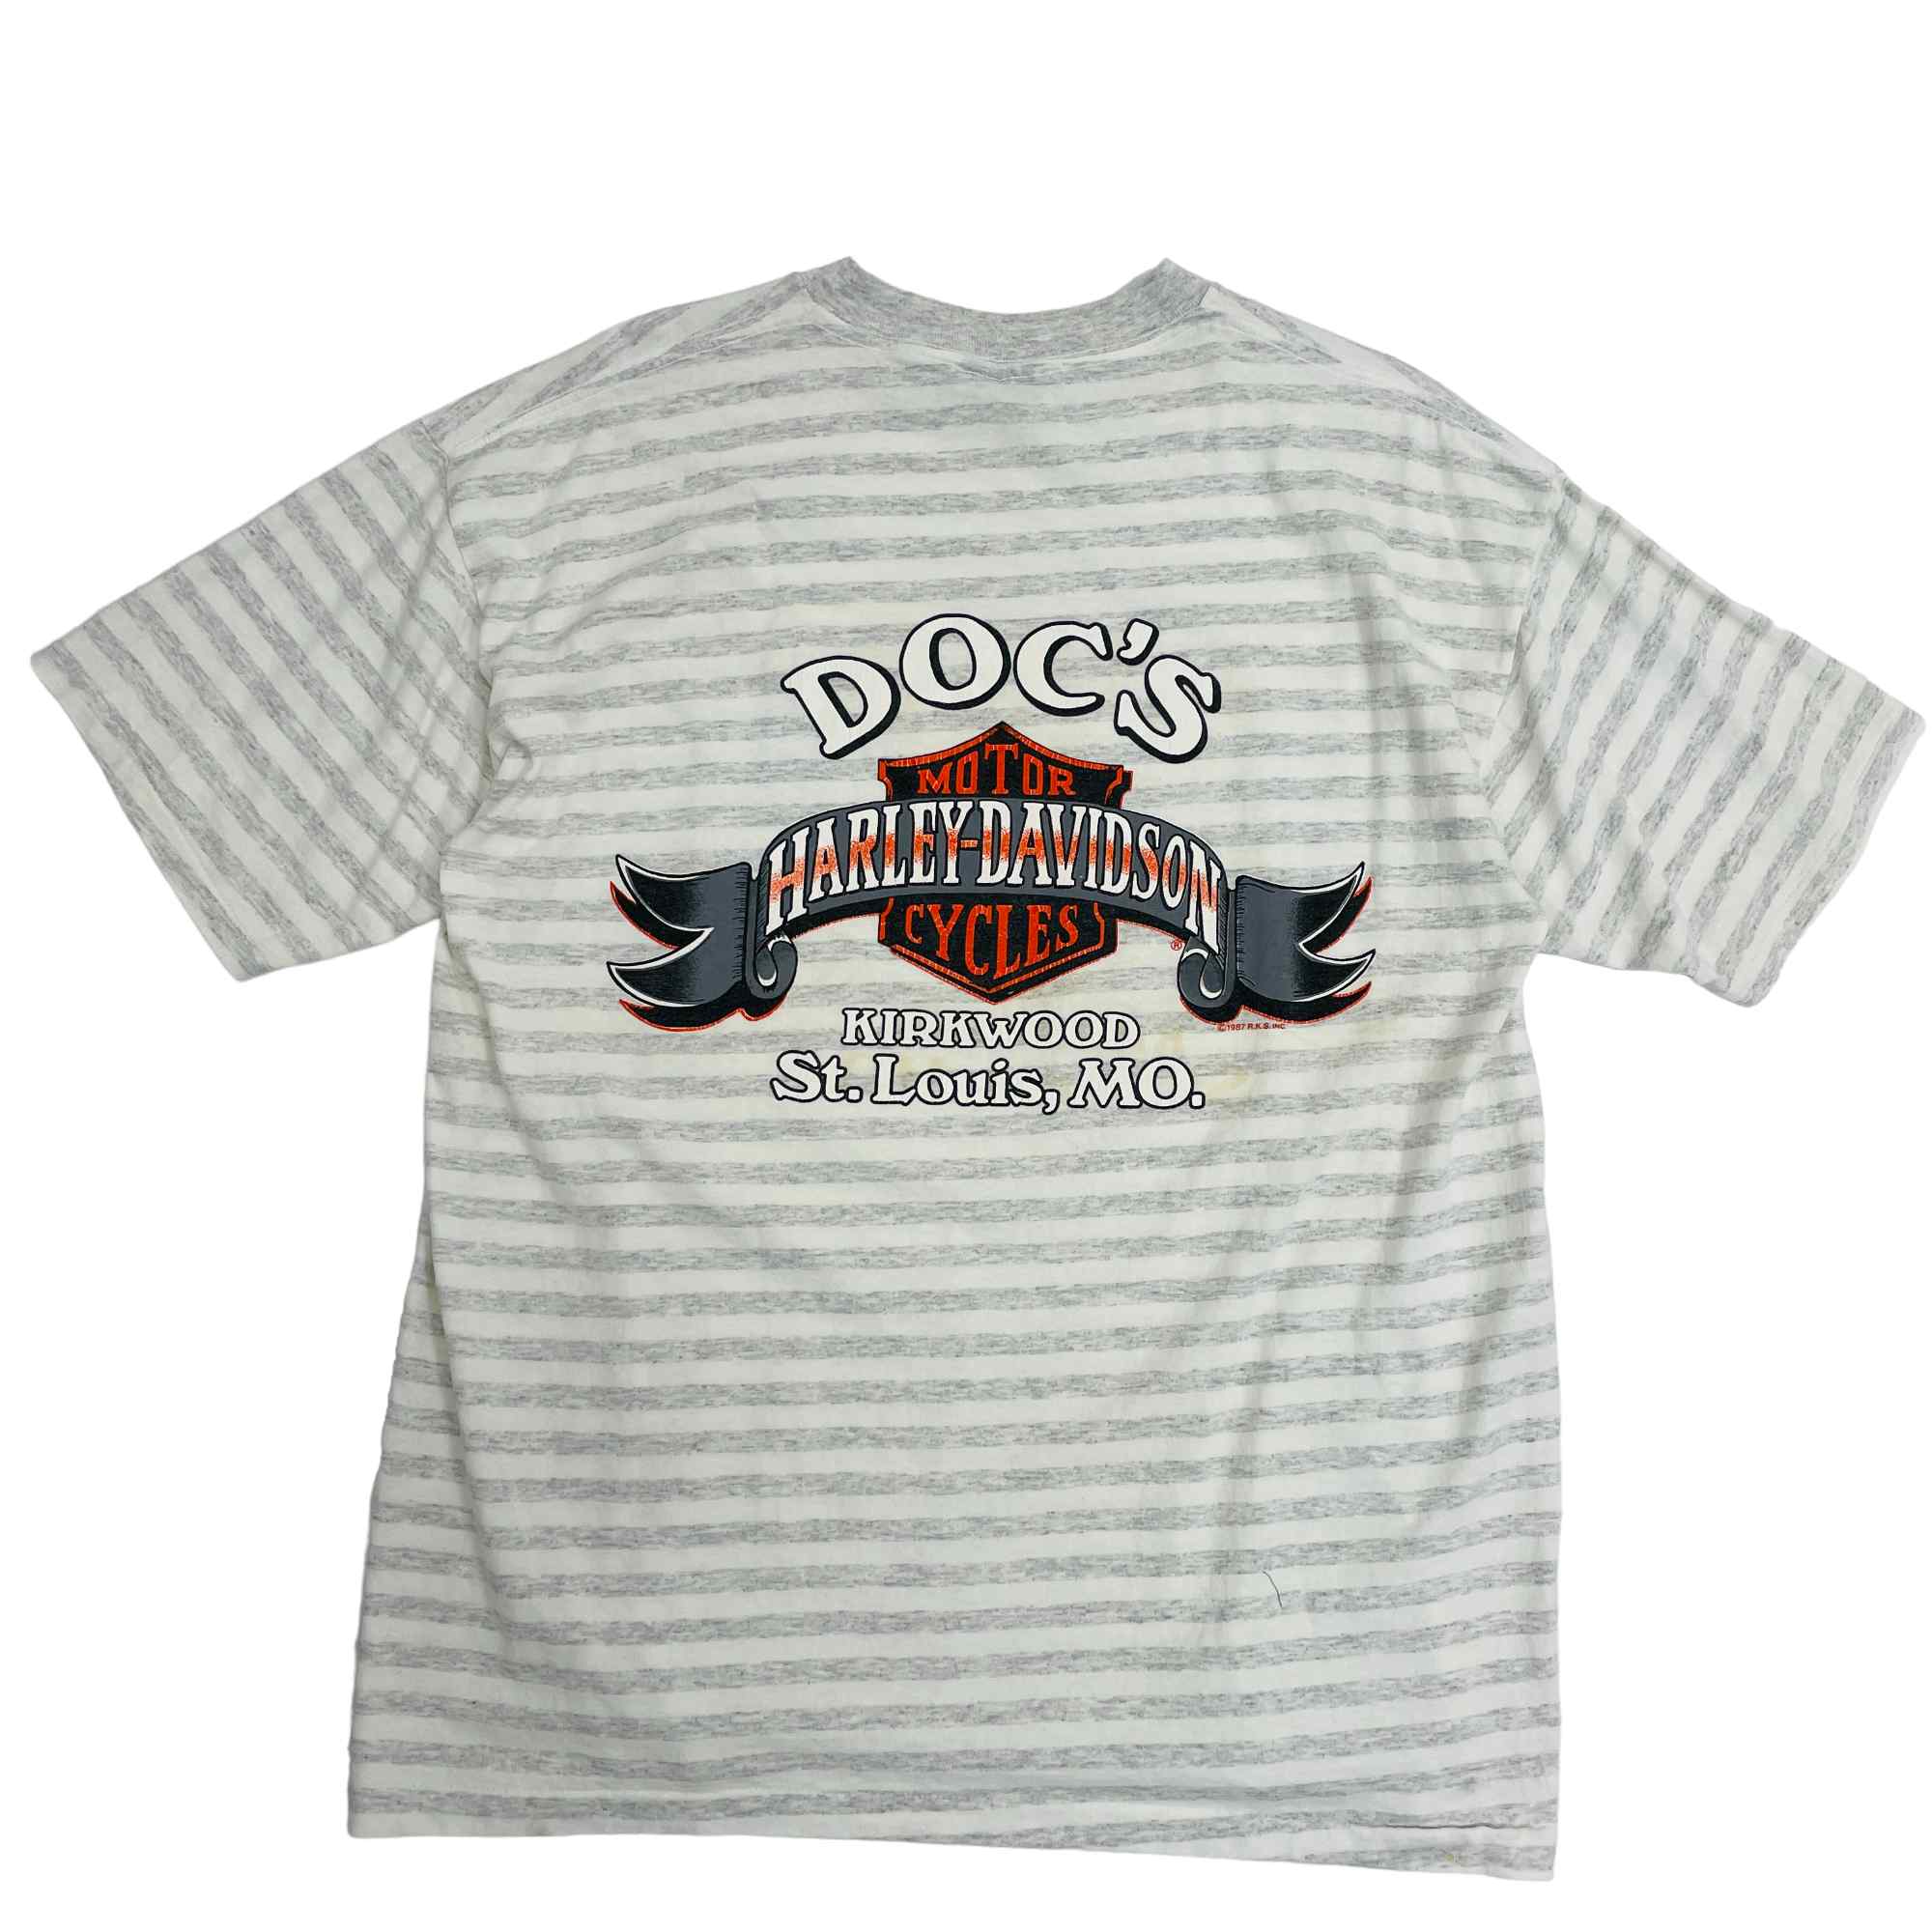 'St. Louis' Harley Davidson T-Shirt - XL